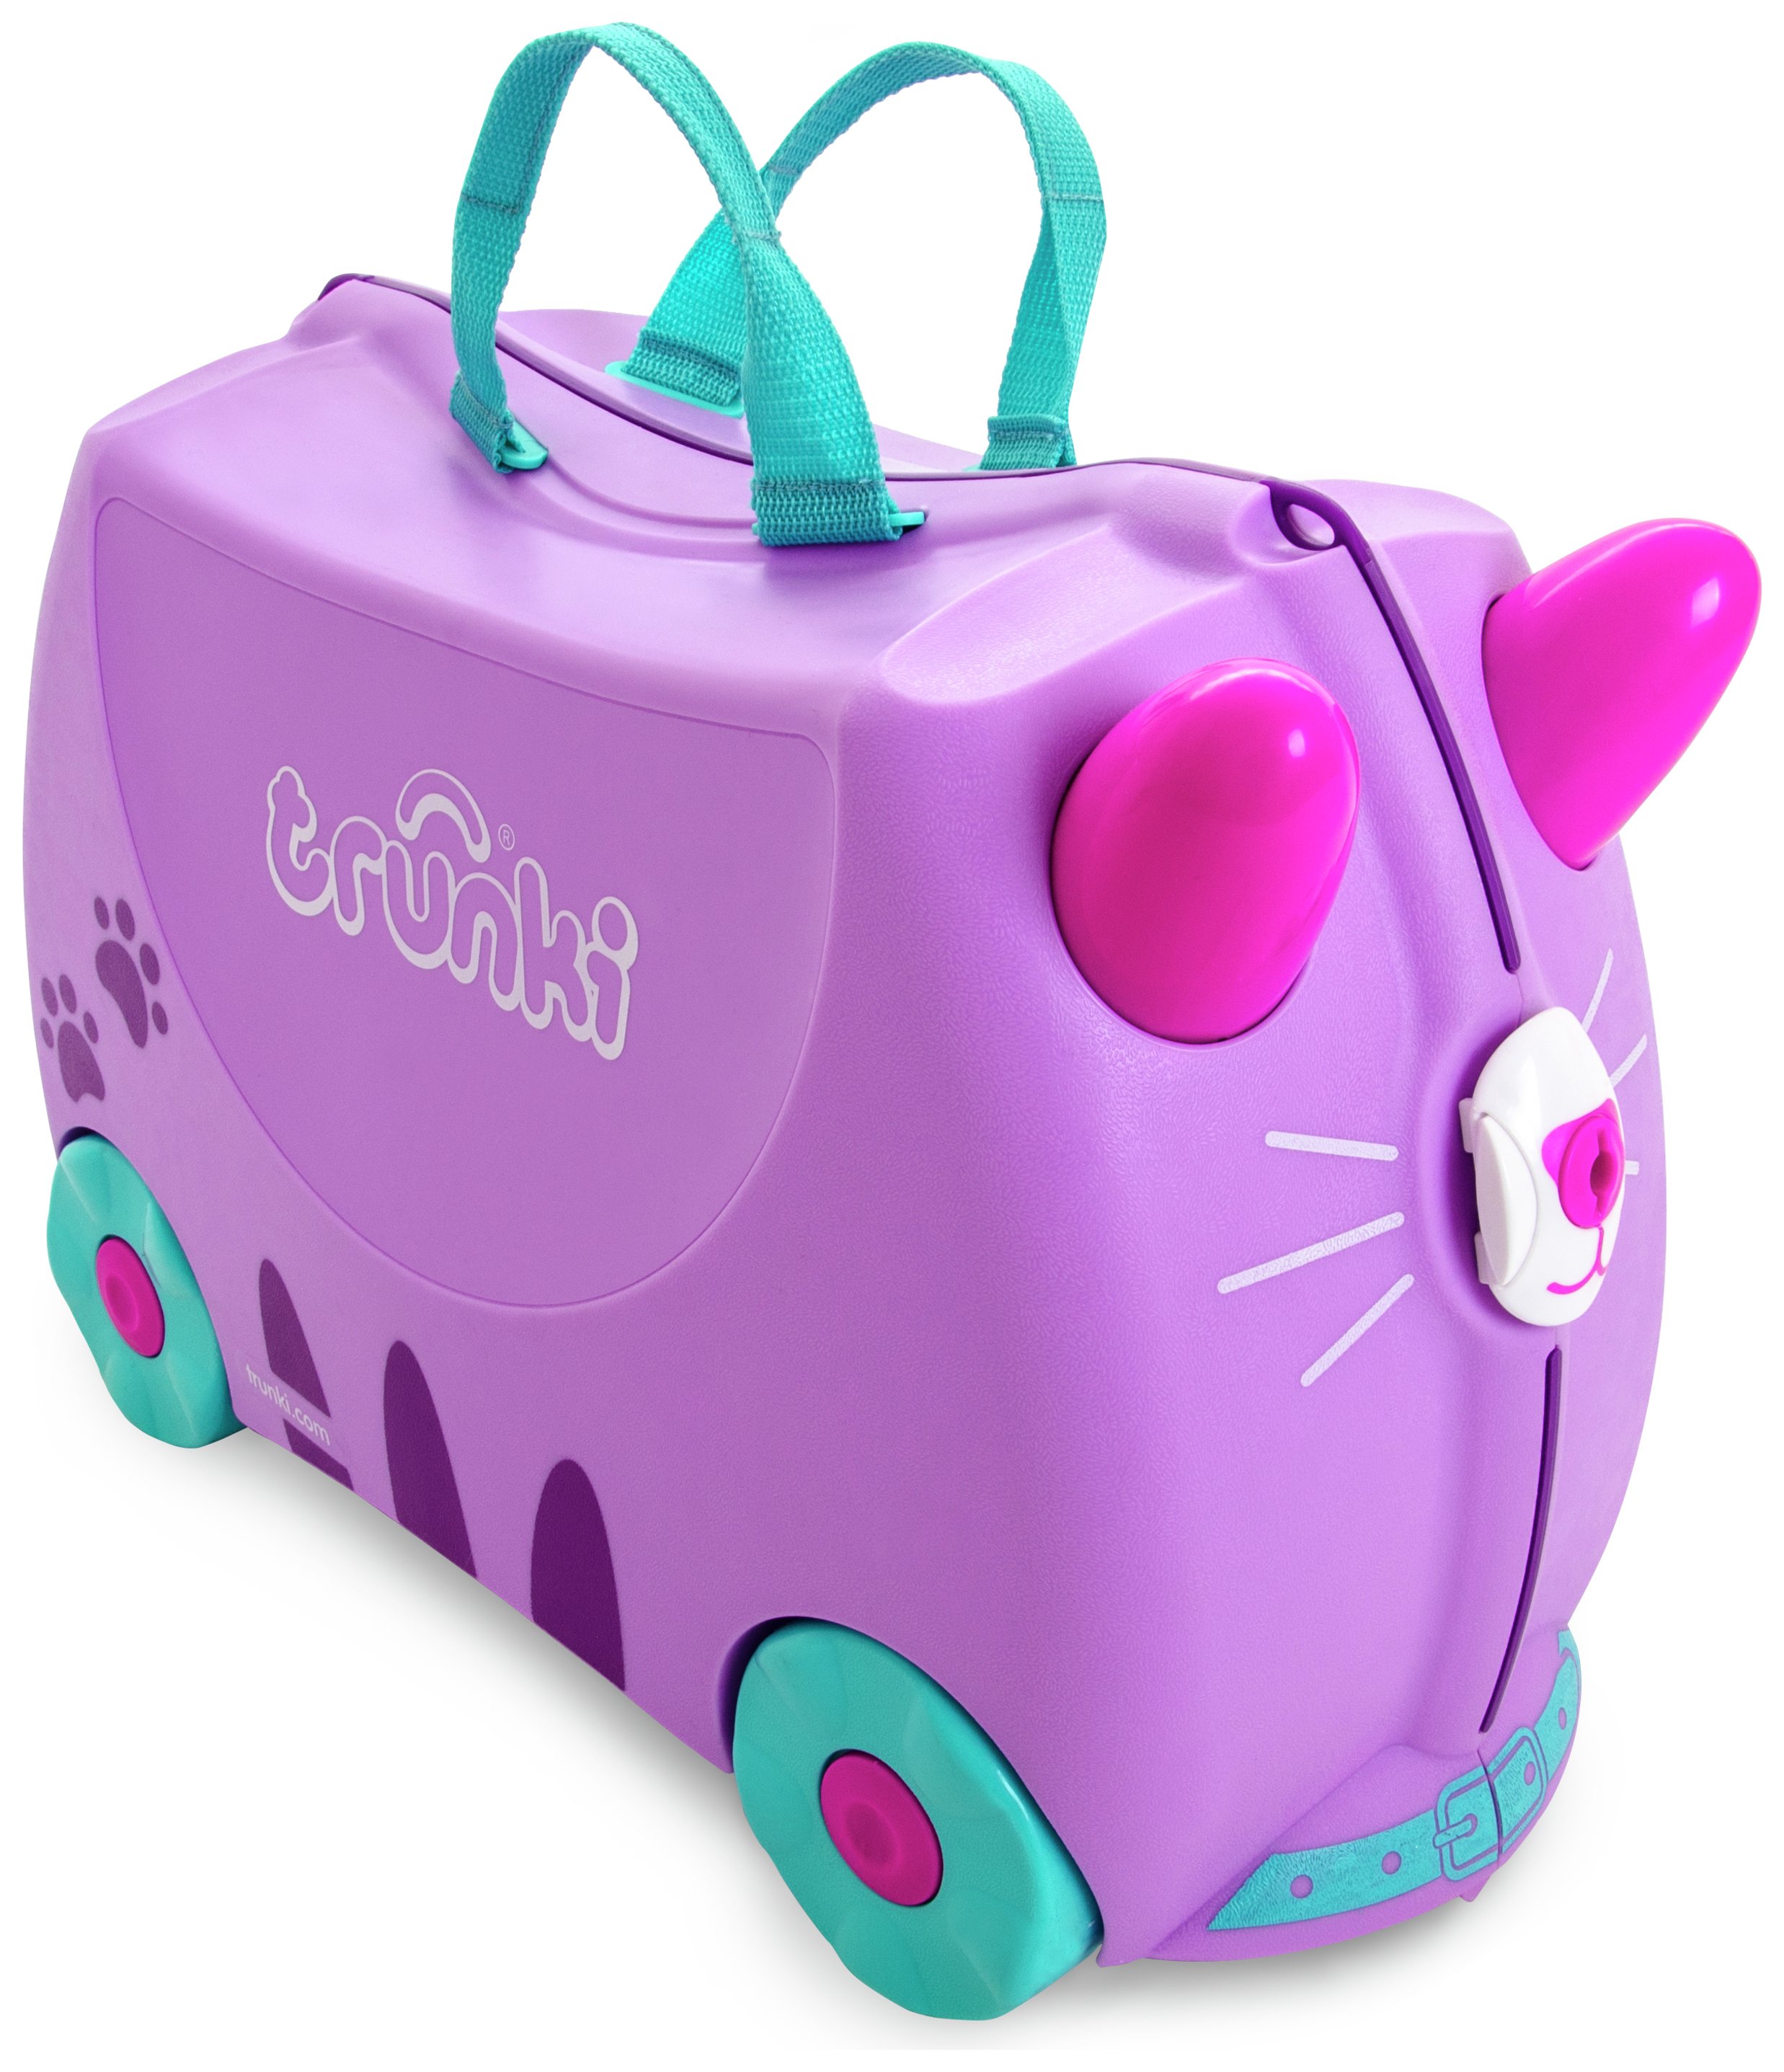 Trunki Cassie the Cat 4 Wheel Hard Ride On Suitcase - Purple